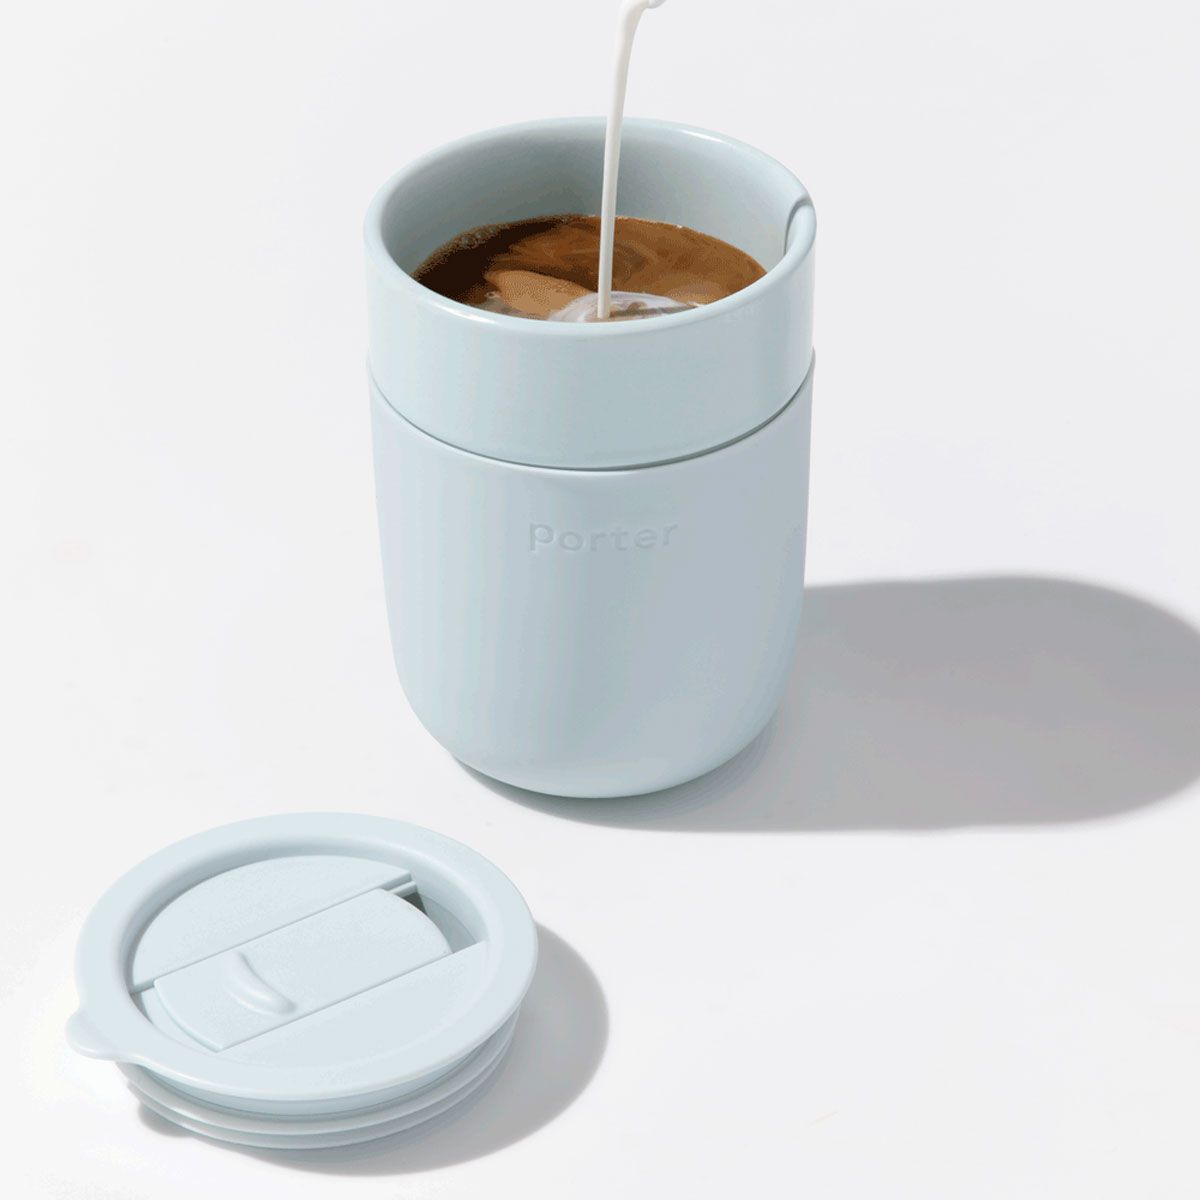 Porter coffee mug